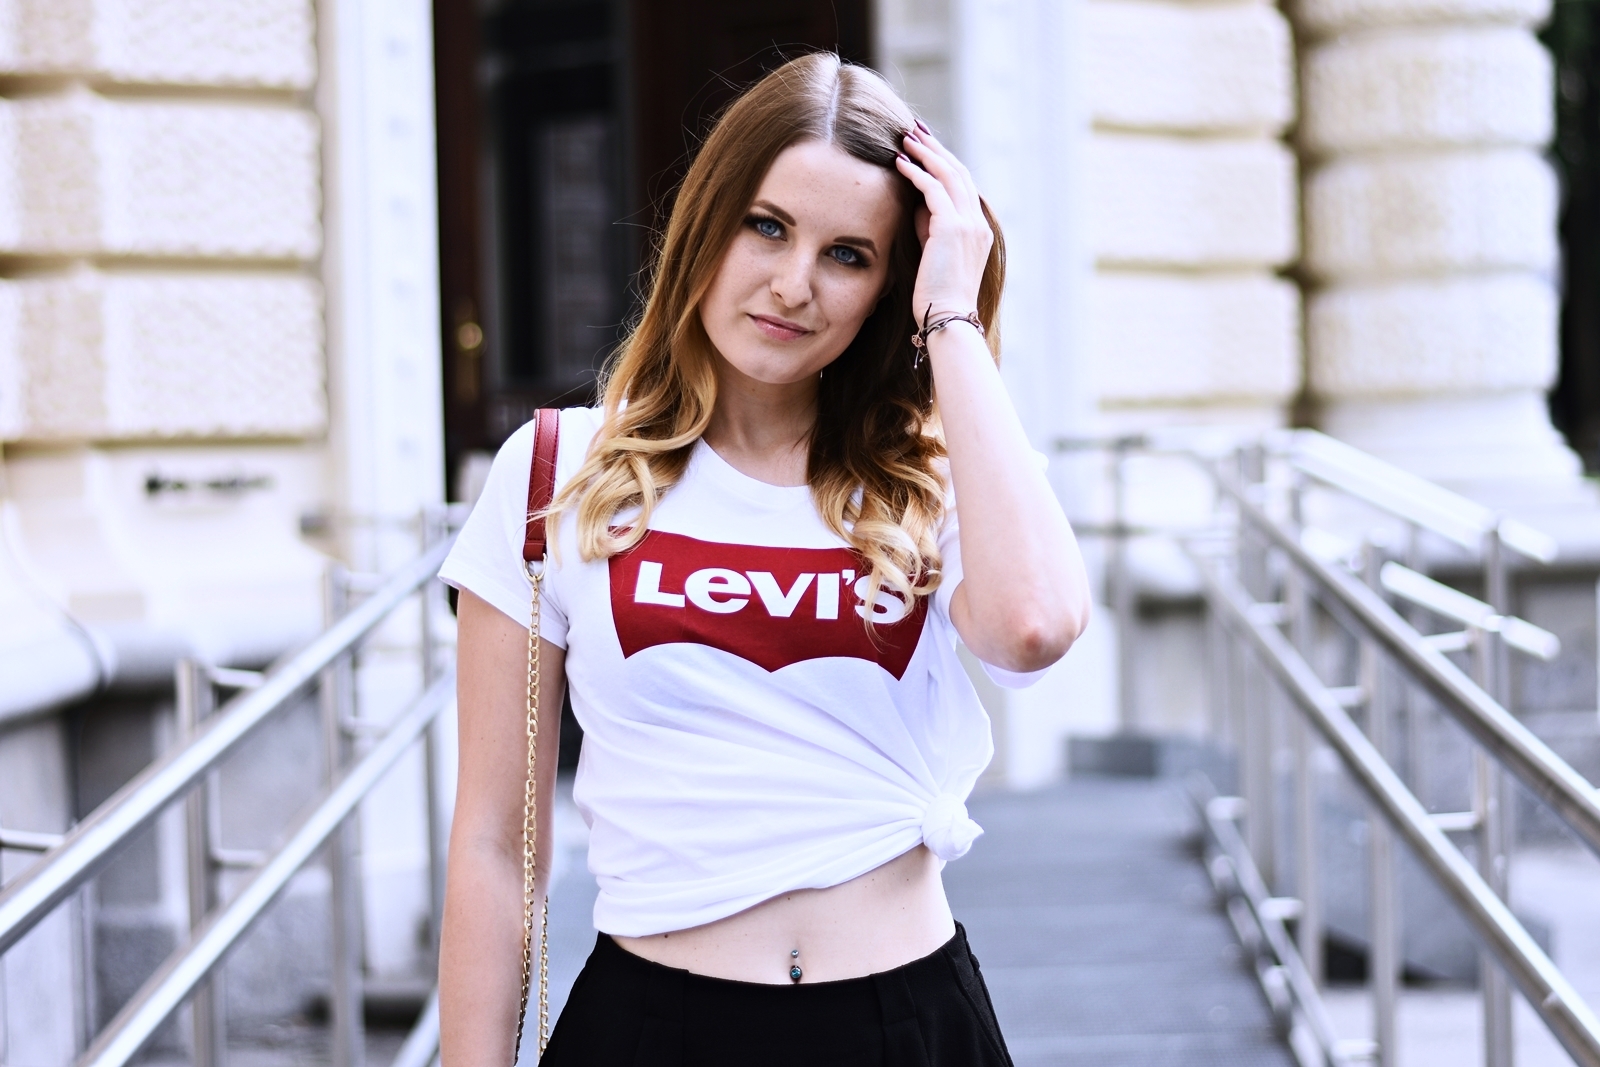 Brand Shirt kombinieren - so stylst du dieses Trend Teil - Levis - Statement - Love Bag - Basic - Rock - Converse - Fashionladyloves by Tamara Wagner Fashionblog